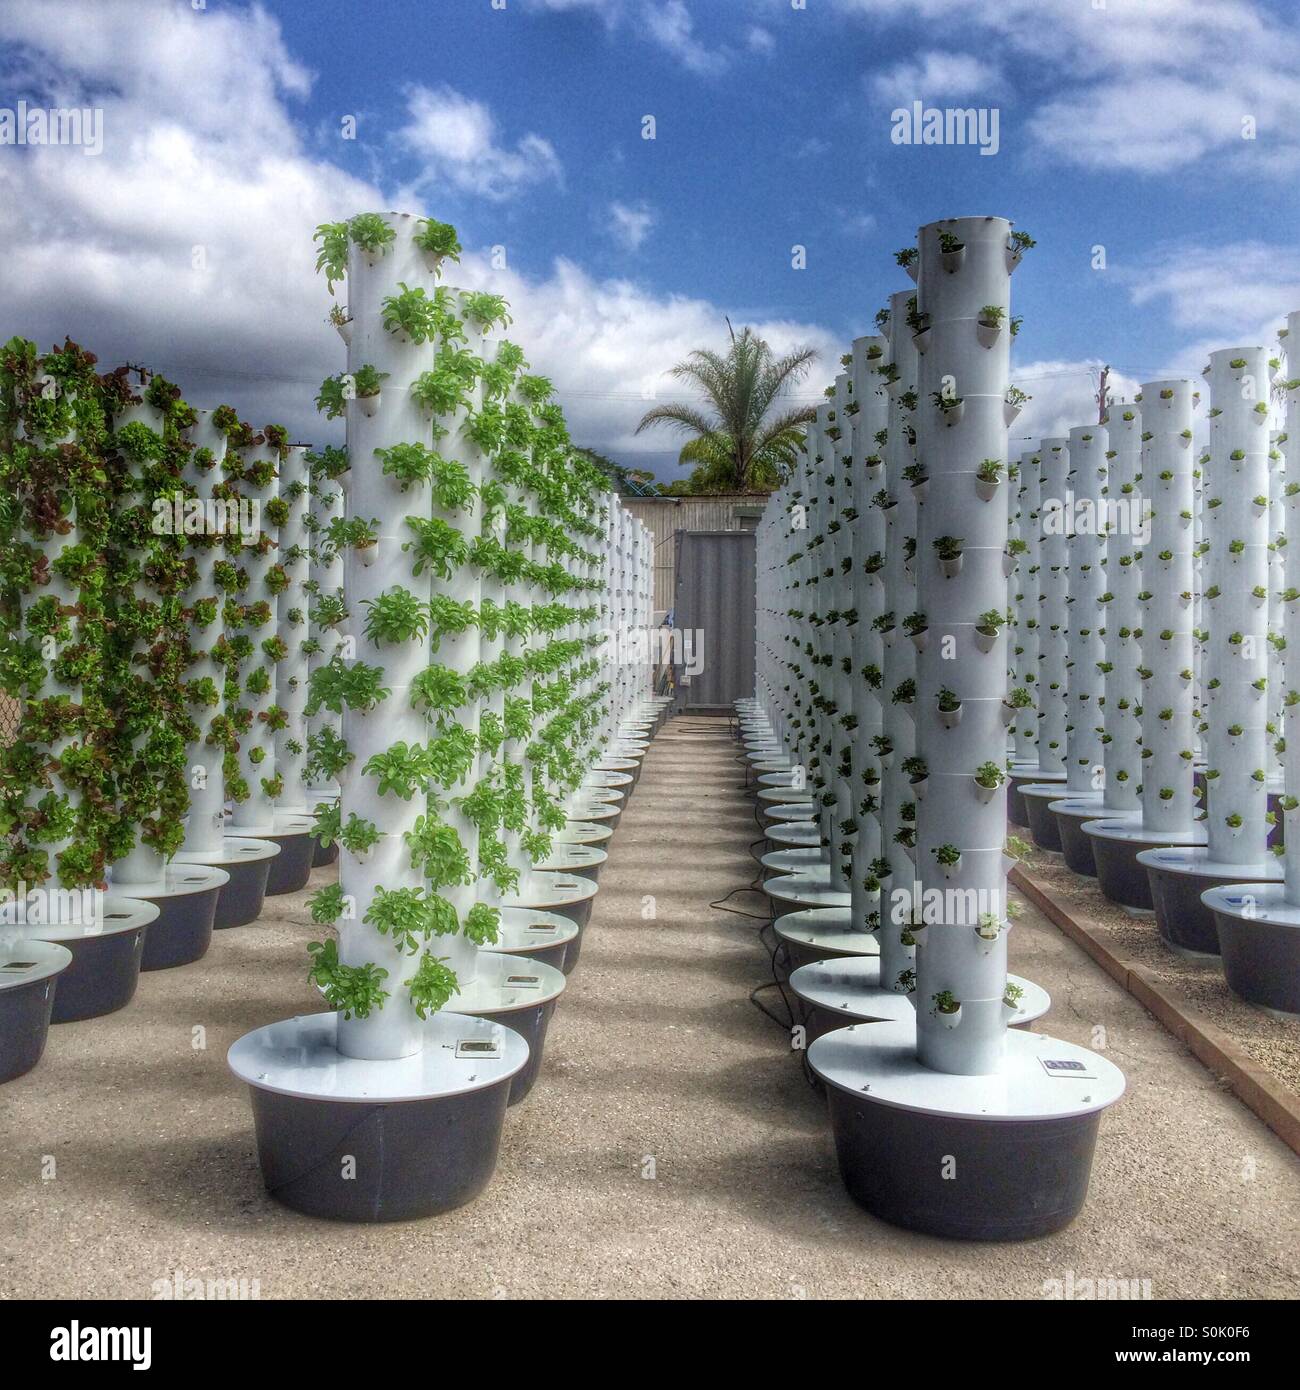 Soil-free aeroponic vertical planters allow urban dwellers ...